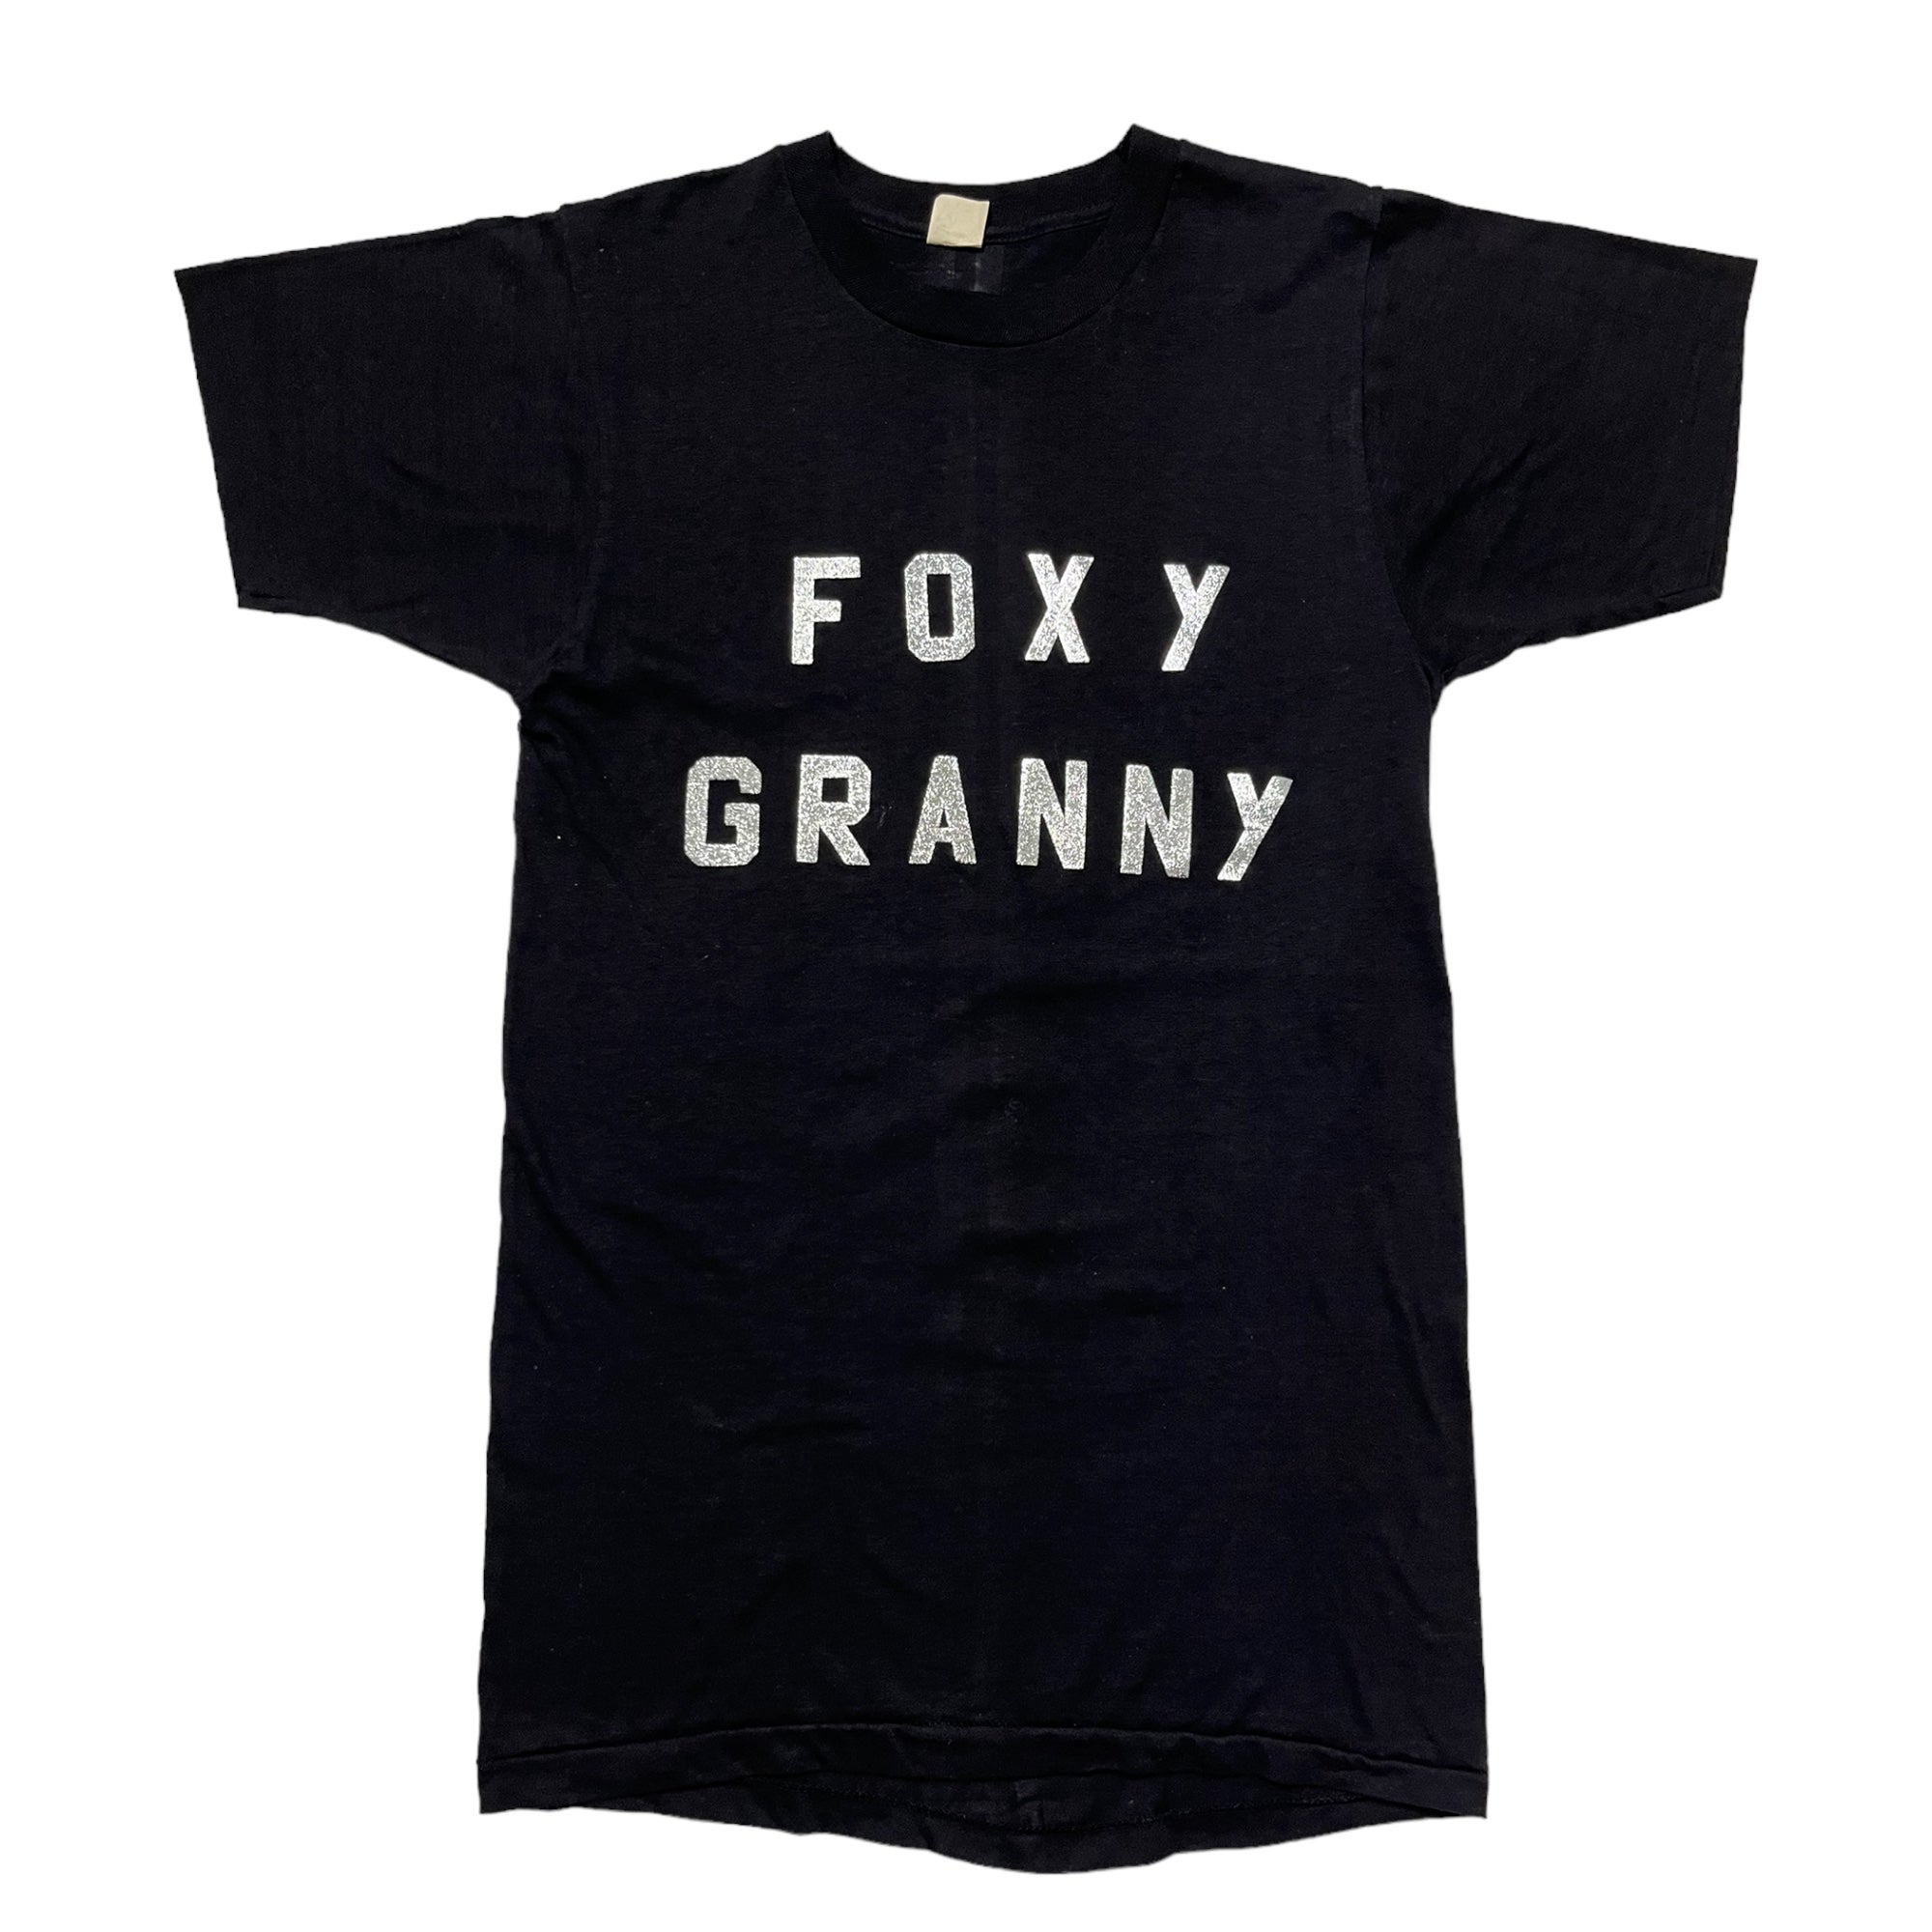 1970s Made in USA ‘Foxy Granny’ Glitter Print Novelty Tee - Black - M/L